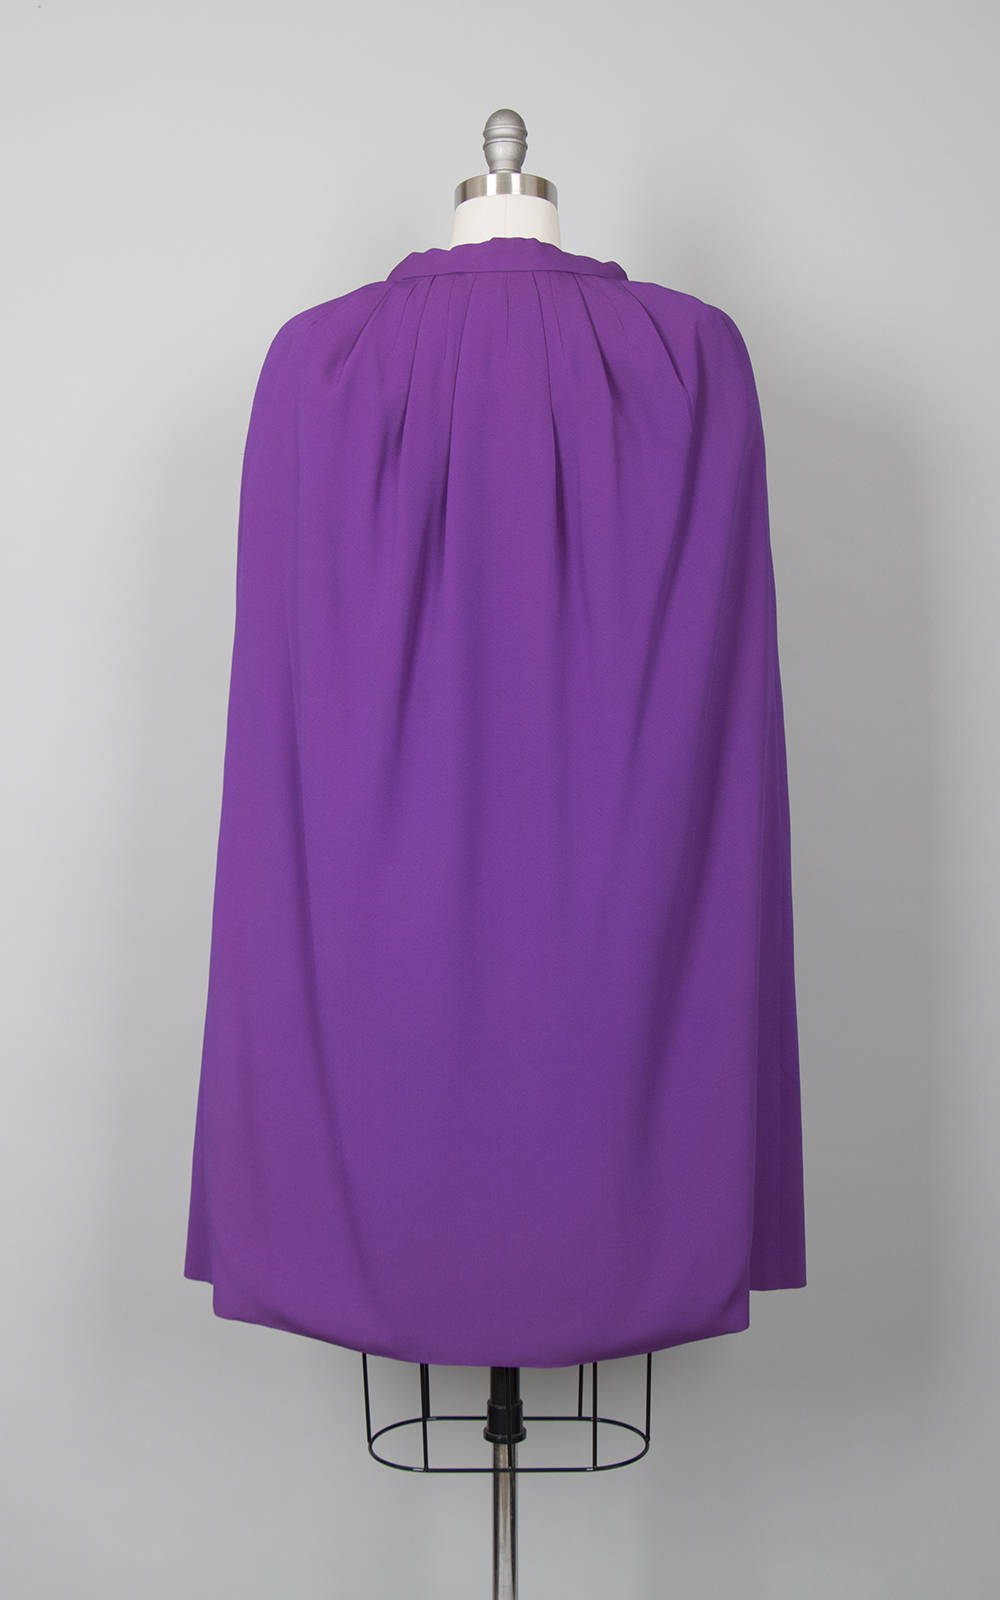 Vintage 1960s Cape | 60s JACQUES HEIM by Maria Carine Purple Rayon Cape Evening Opera Cloak (xs/small/medium)